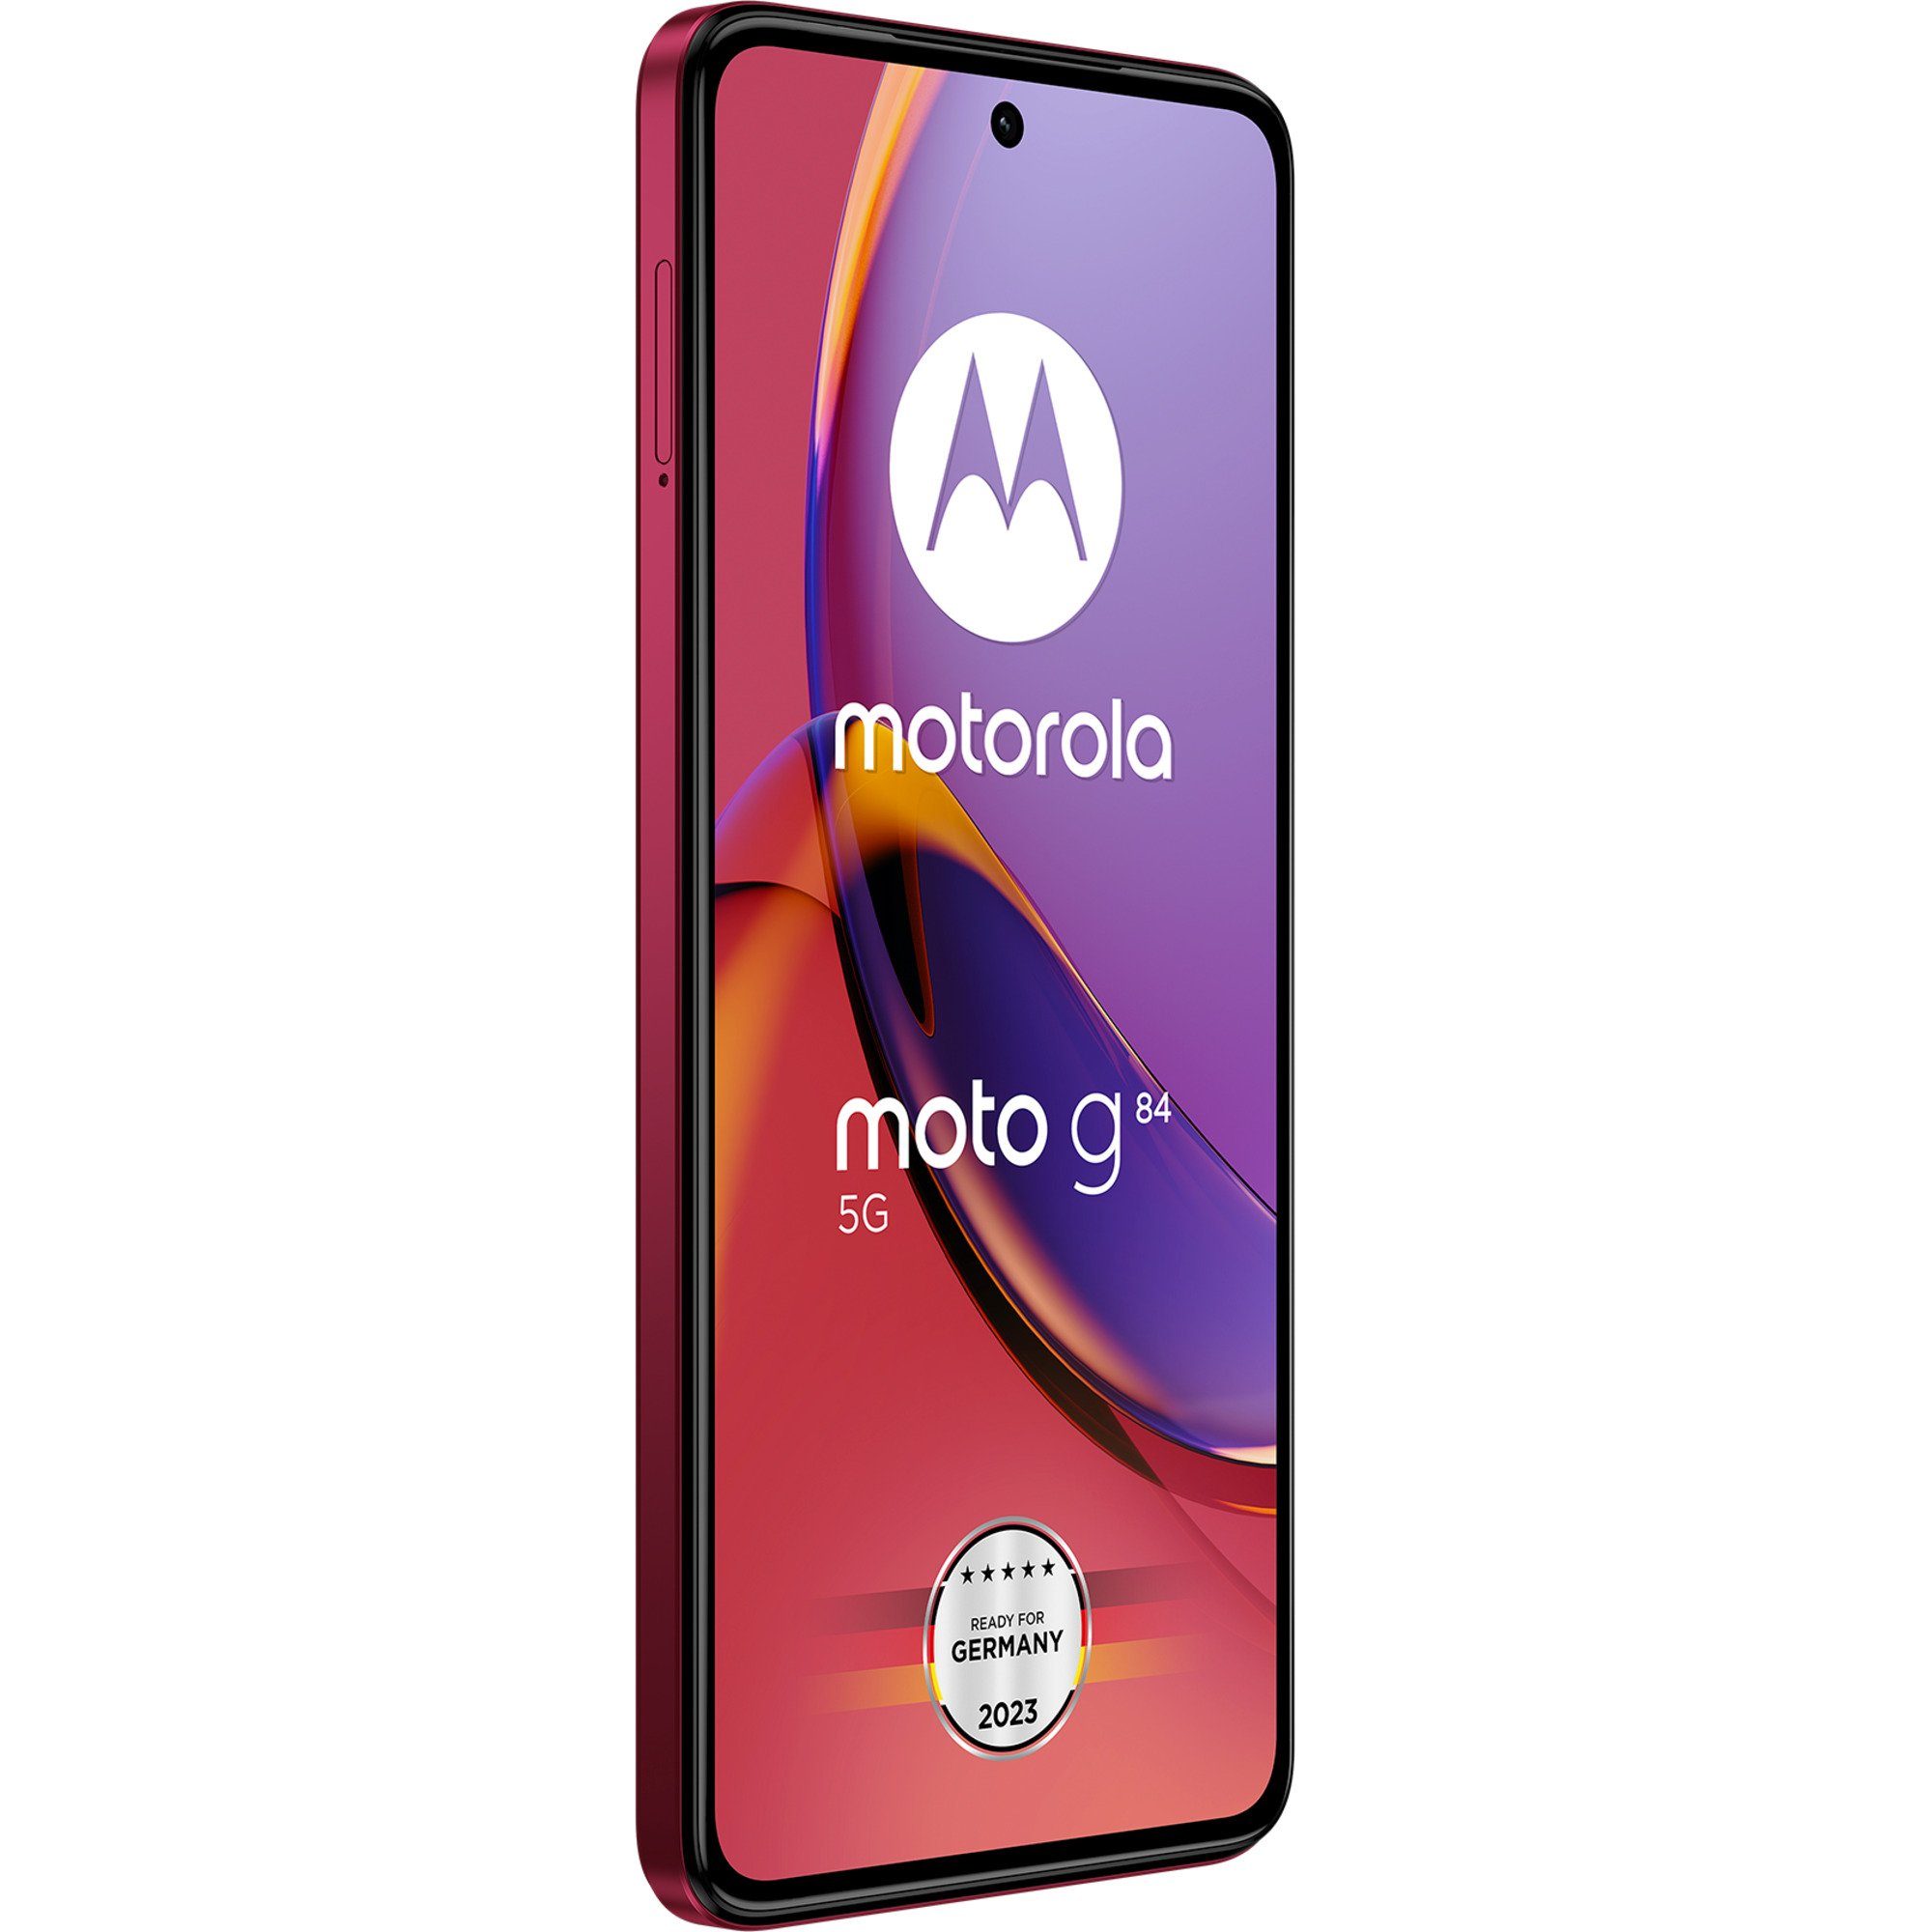 Motorola Motorola g84 Smartphone 256GB, Handy, (50 5G MP Kamera) (Viva Magenta, MP